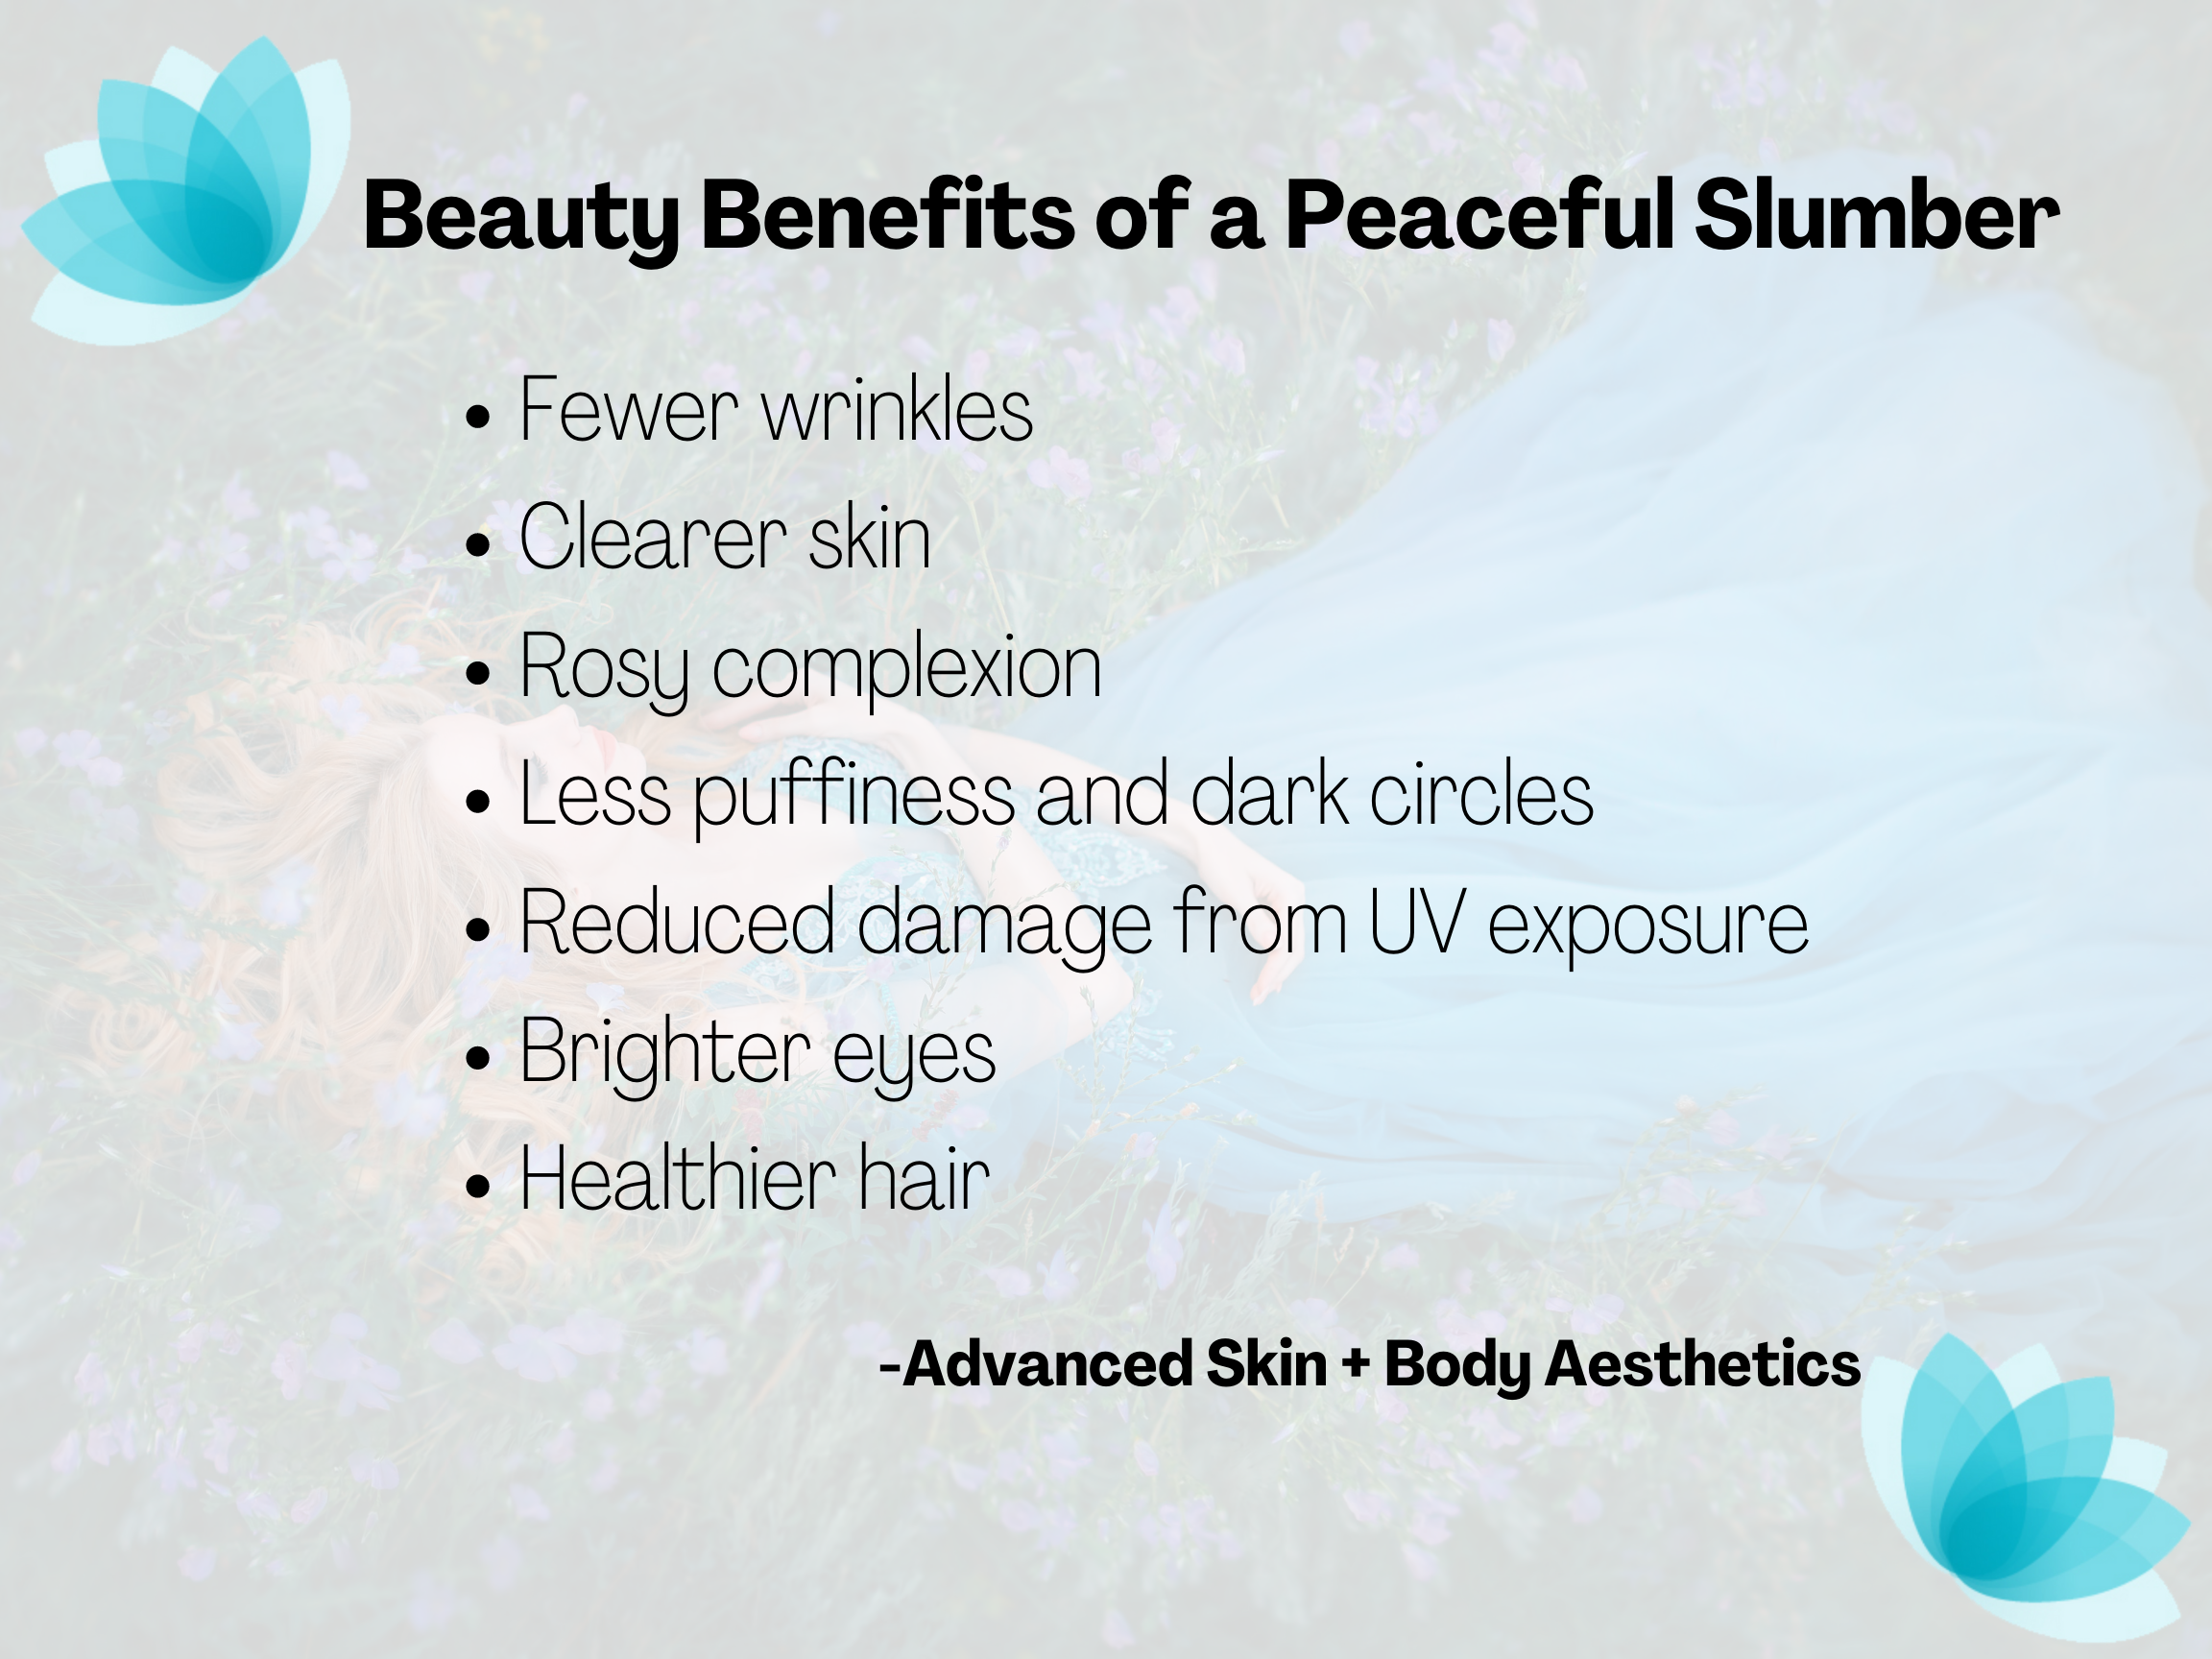 Beauty benefits of sleep from Lincoln, NE spa, Advanced Skin+Body Aesthetics.